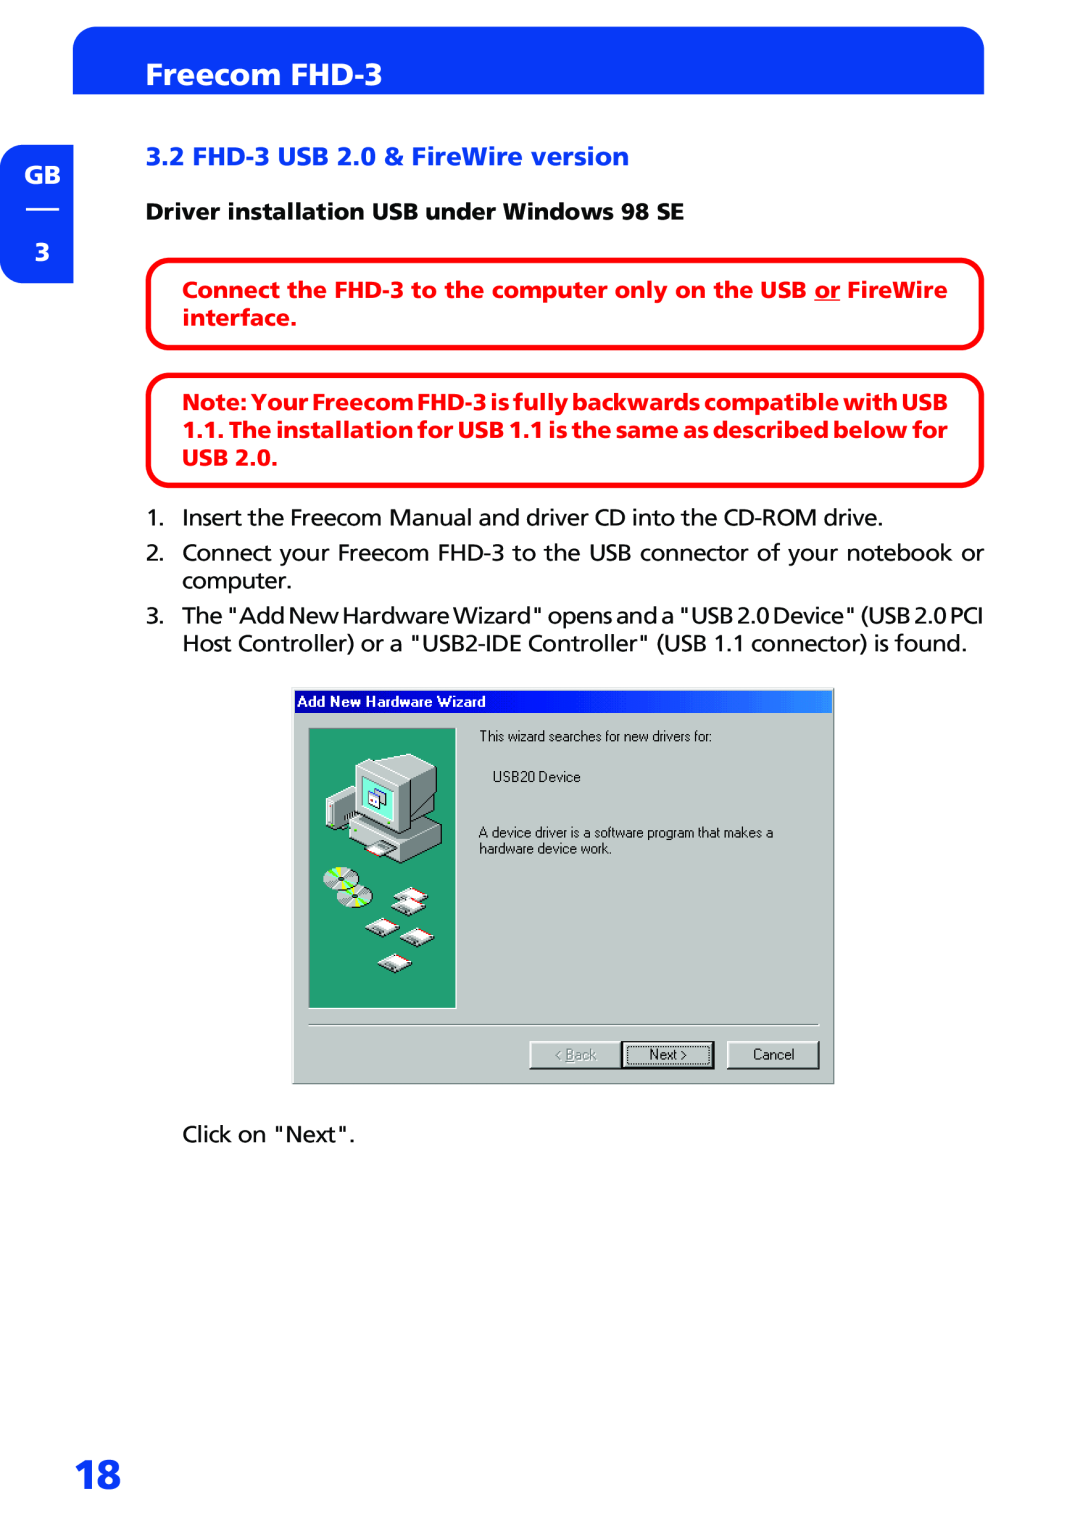 Freecom Technologies manual FHD-3 USB 2.0 & FireWire version, Freecom FHD-3 